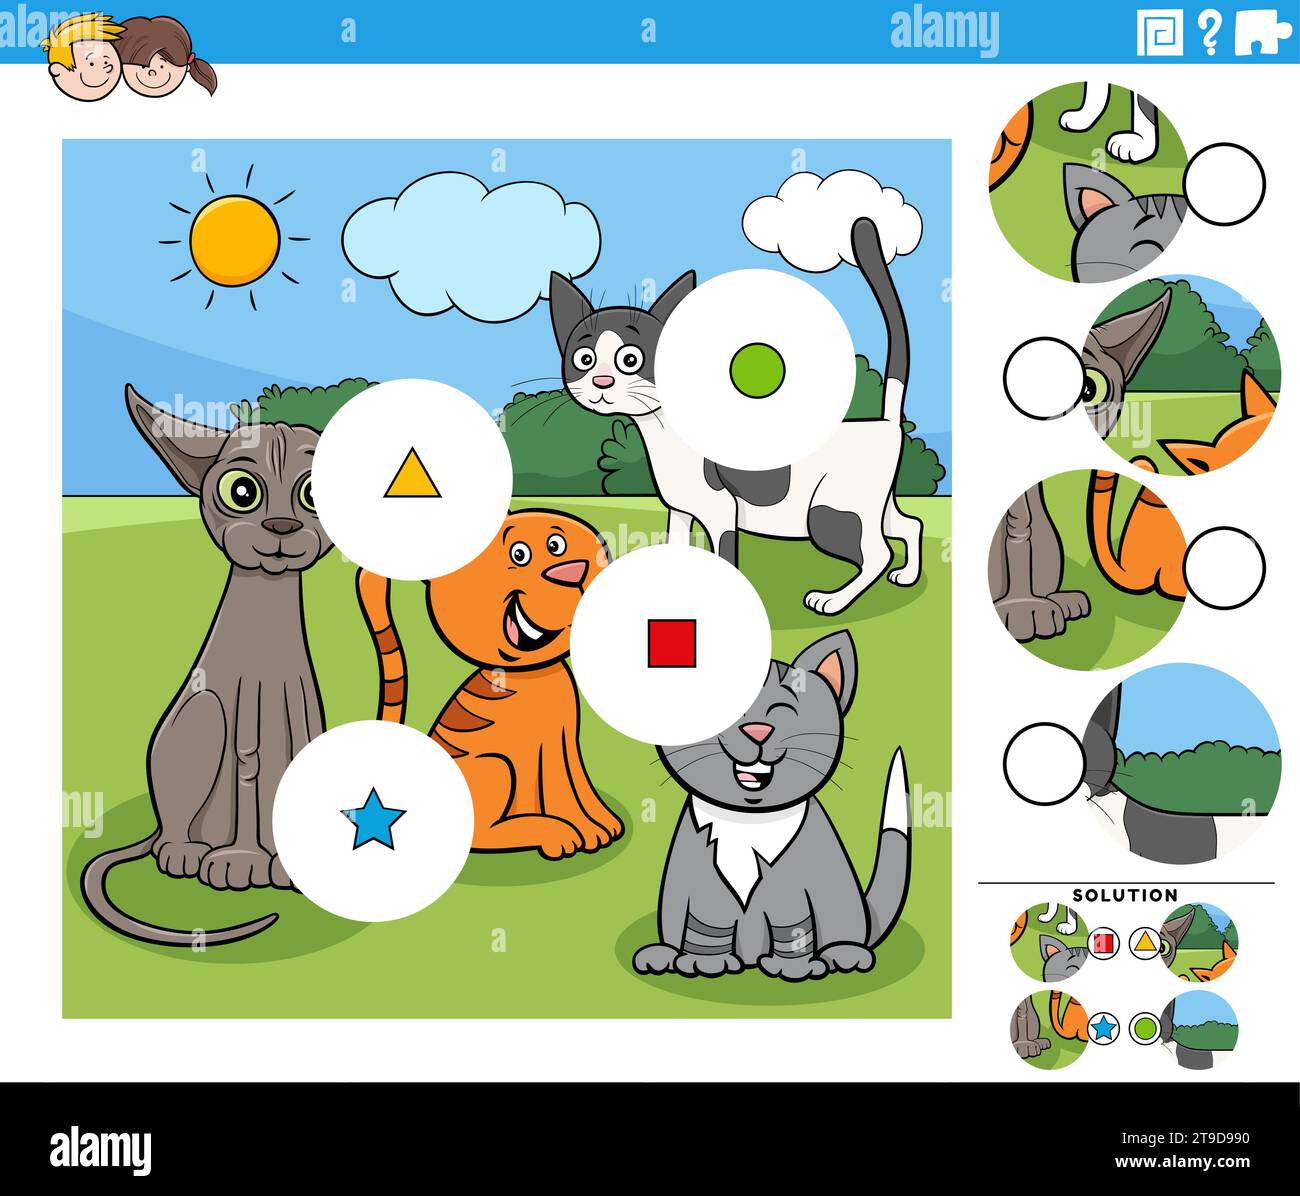 Cute Cats 45 Piece Children's Educational Jigsaw Puzzle